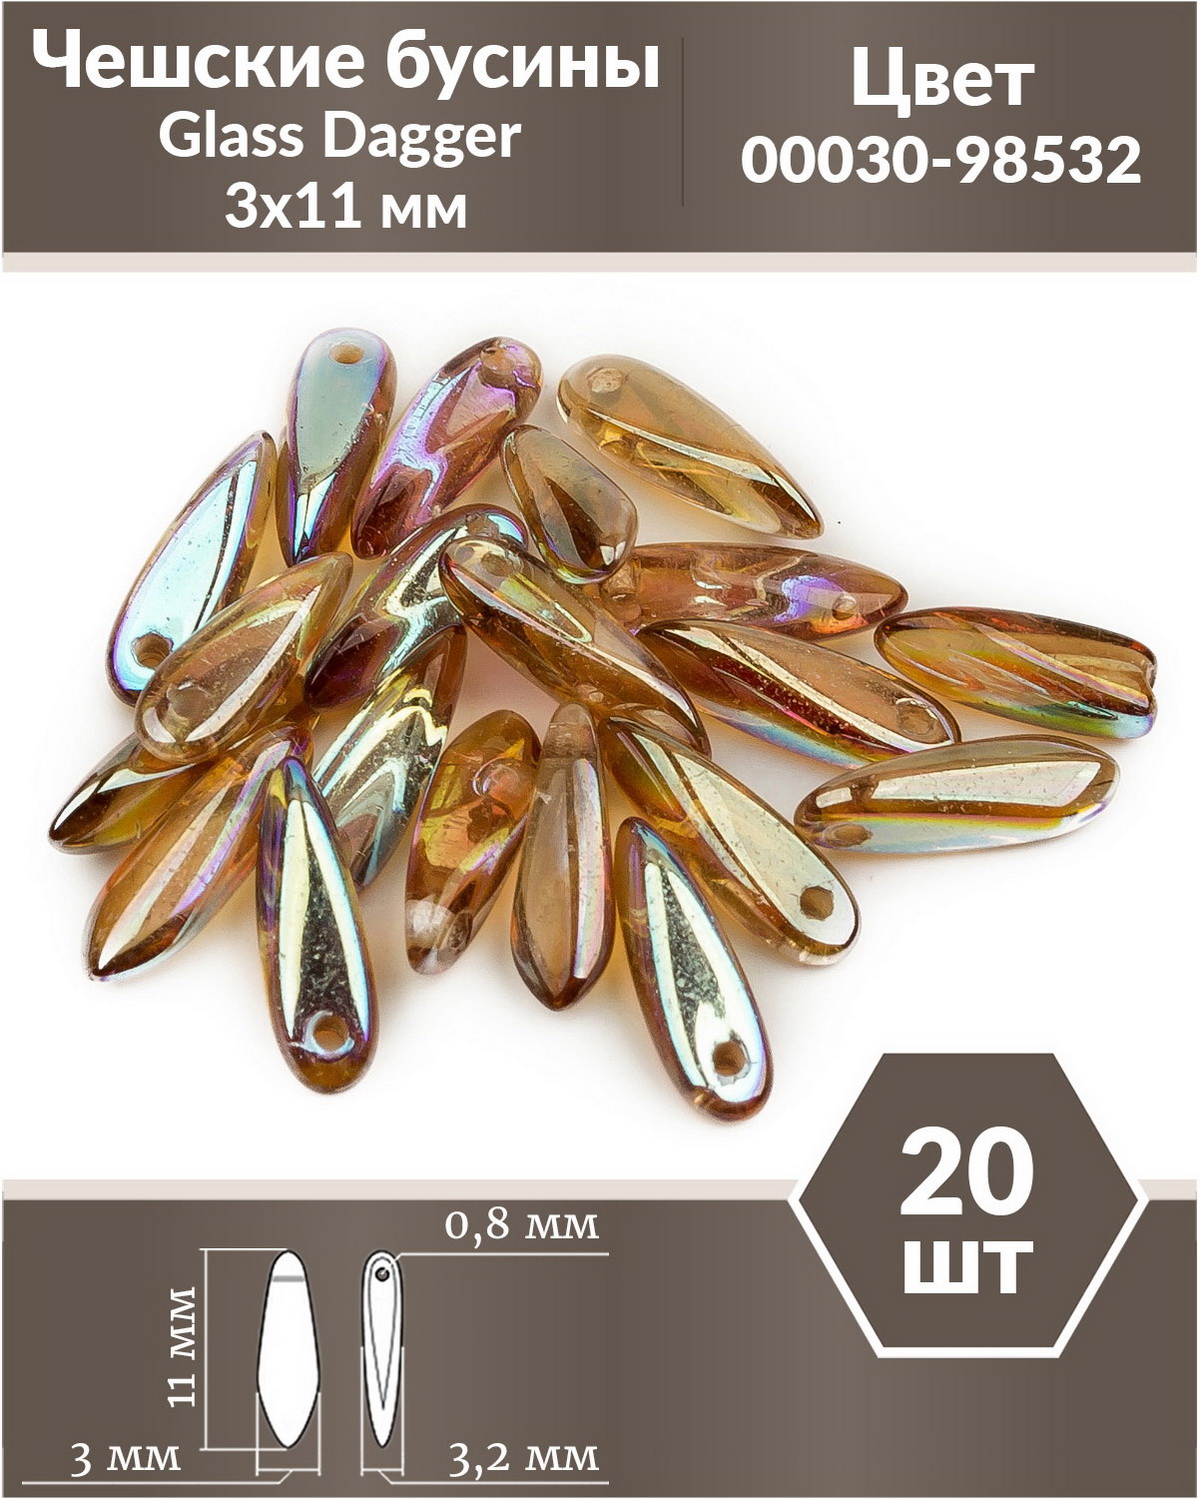 Чешские бусины Czech Beads Glass Dagger, 3х11 мм, Crystal Brown Rainbow 20 шт